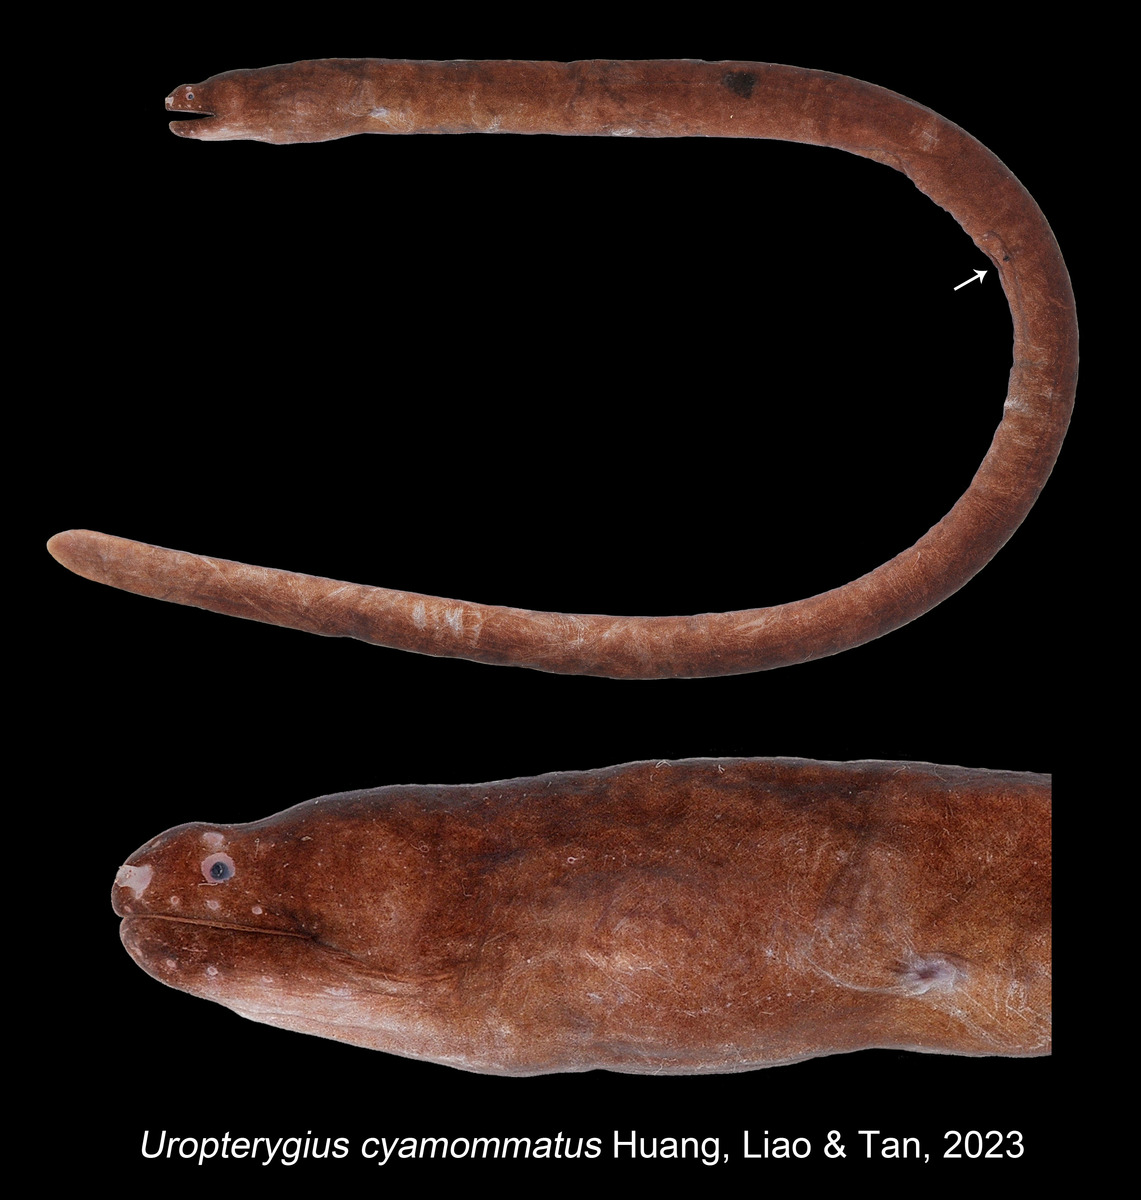 The "Bean-eyed snake moray" (Uropterygius cyamommatus).